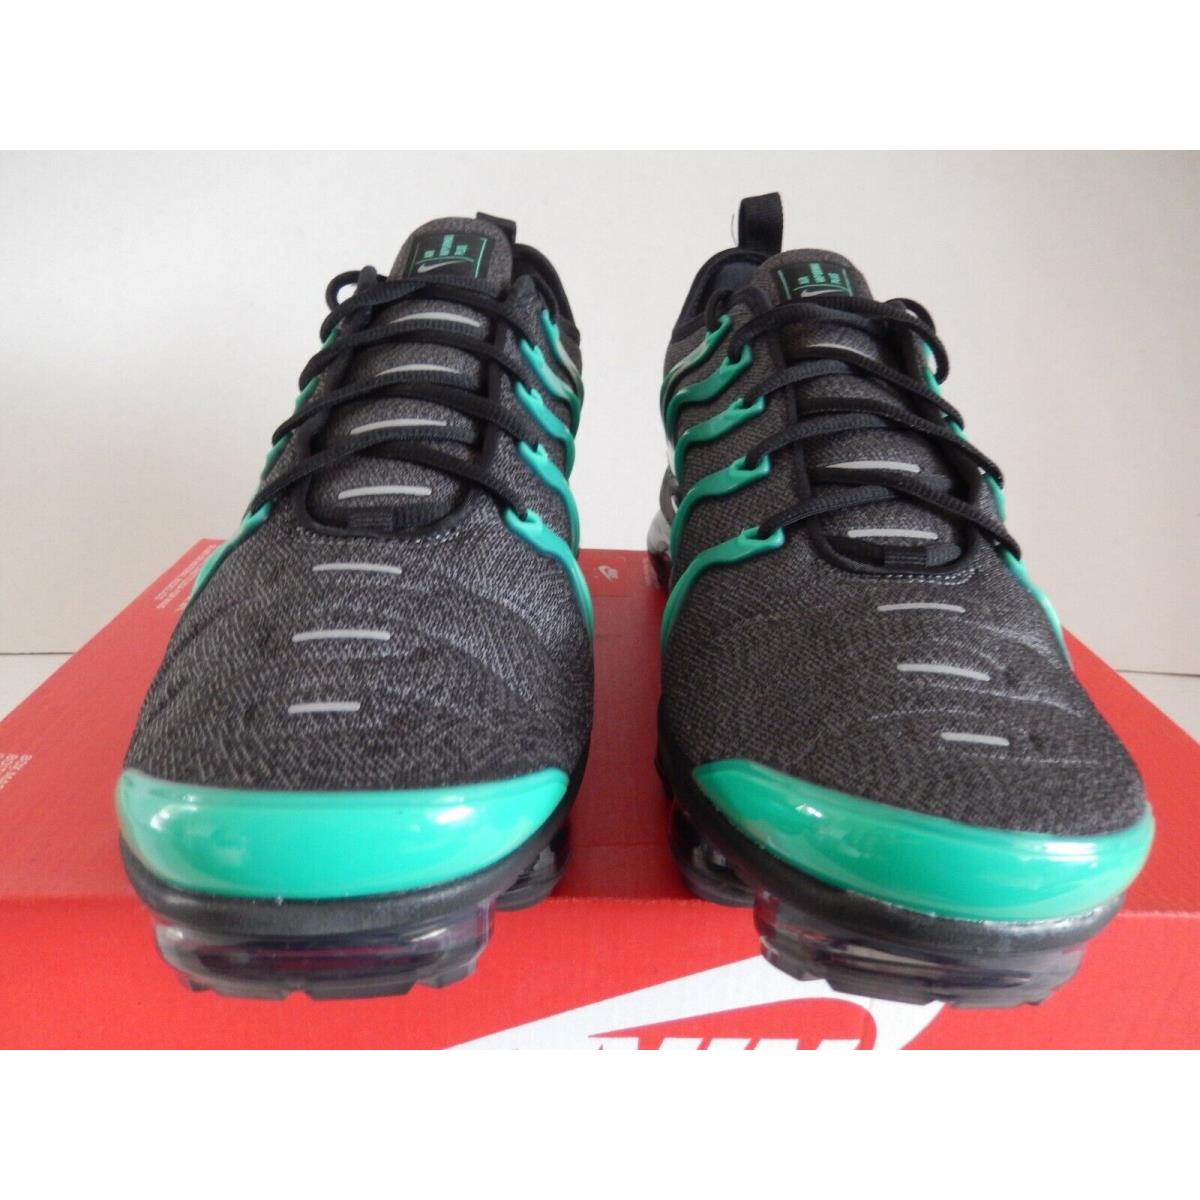 Nike shoes Air Vapormax Plus - Black 1